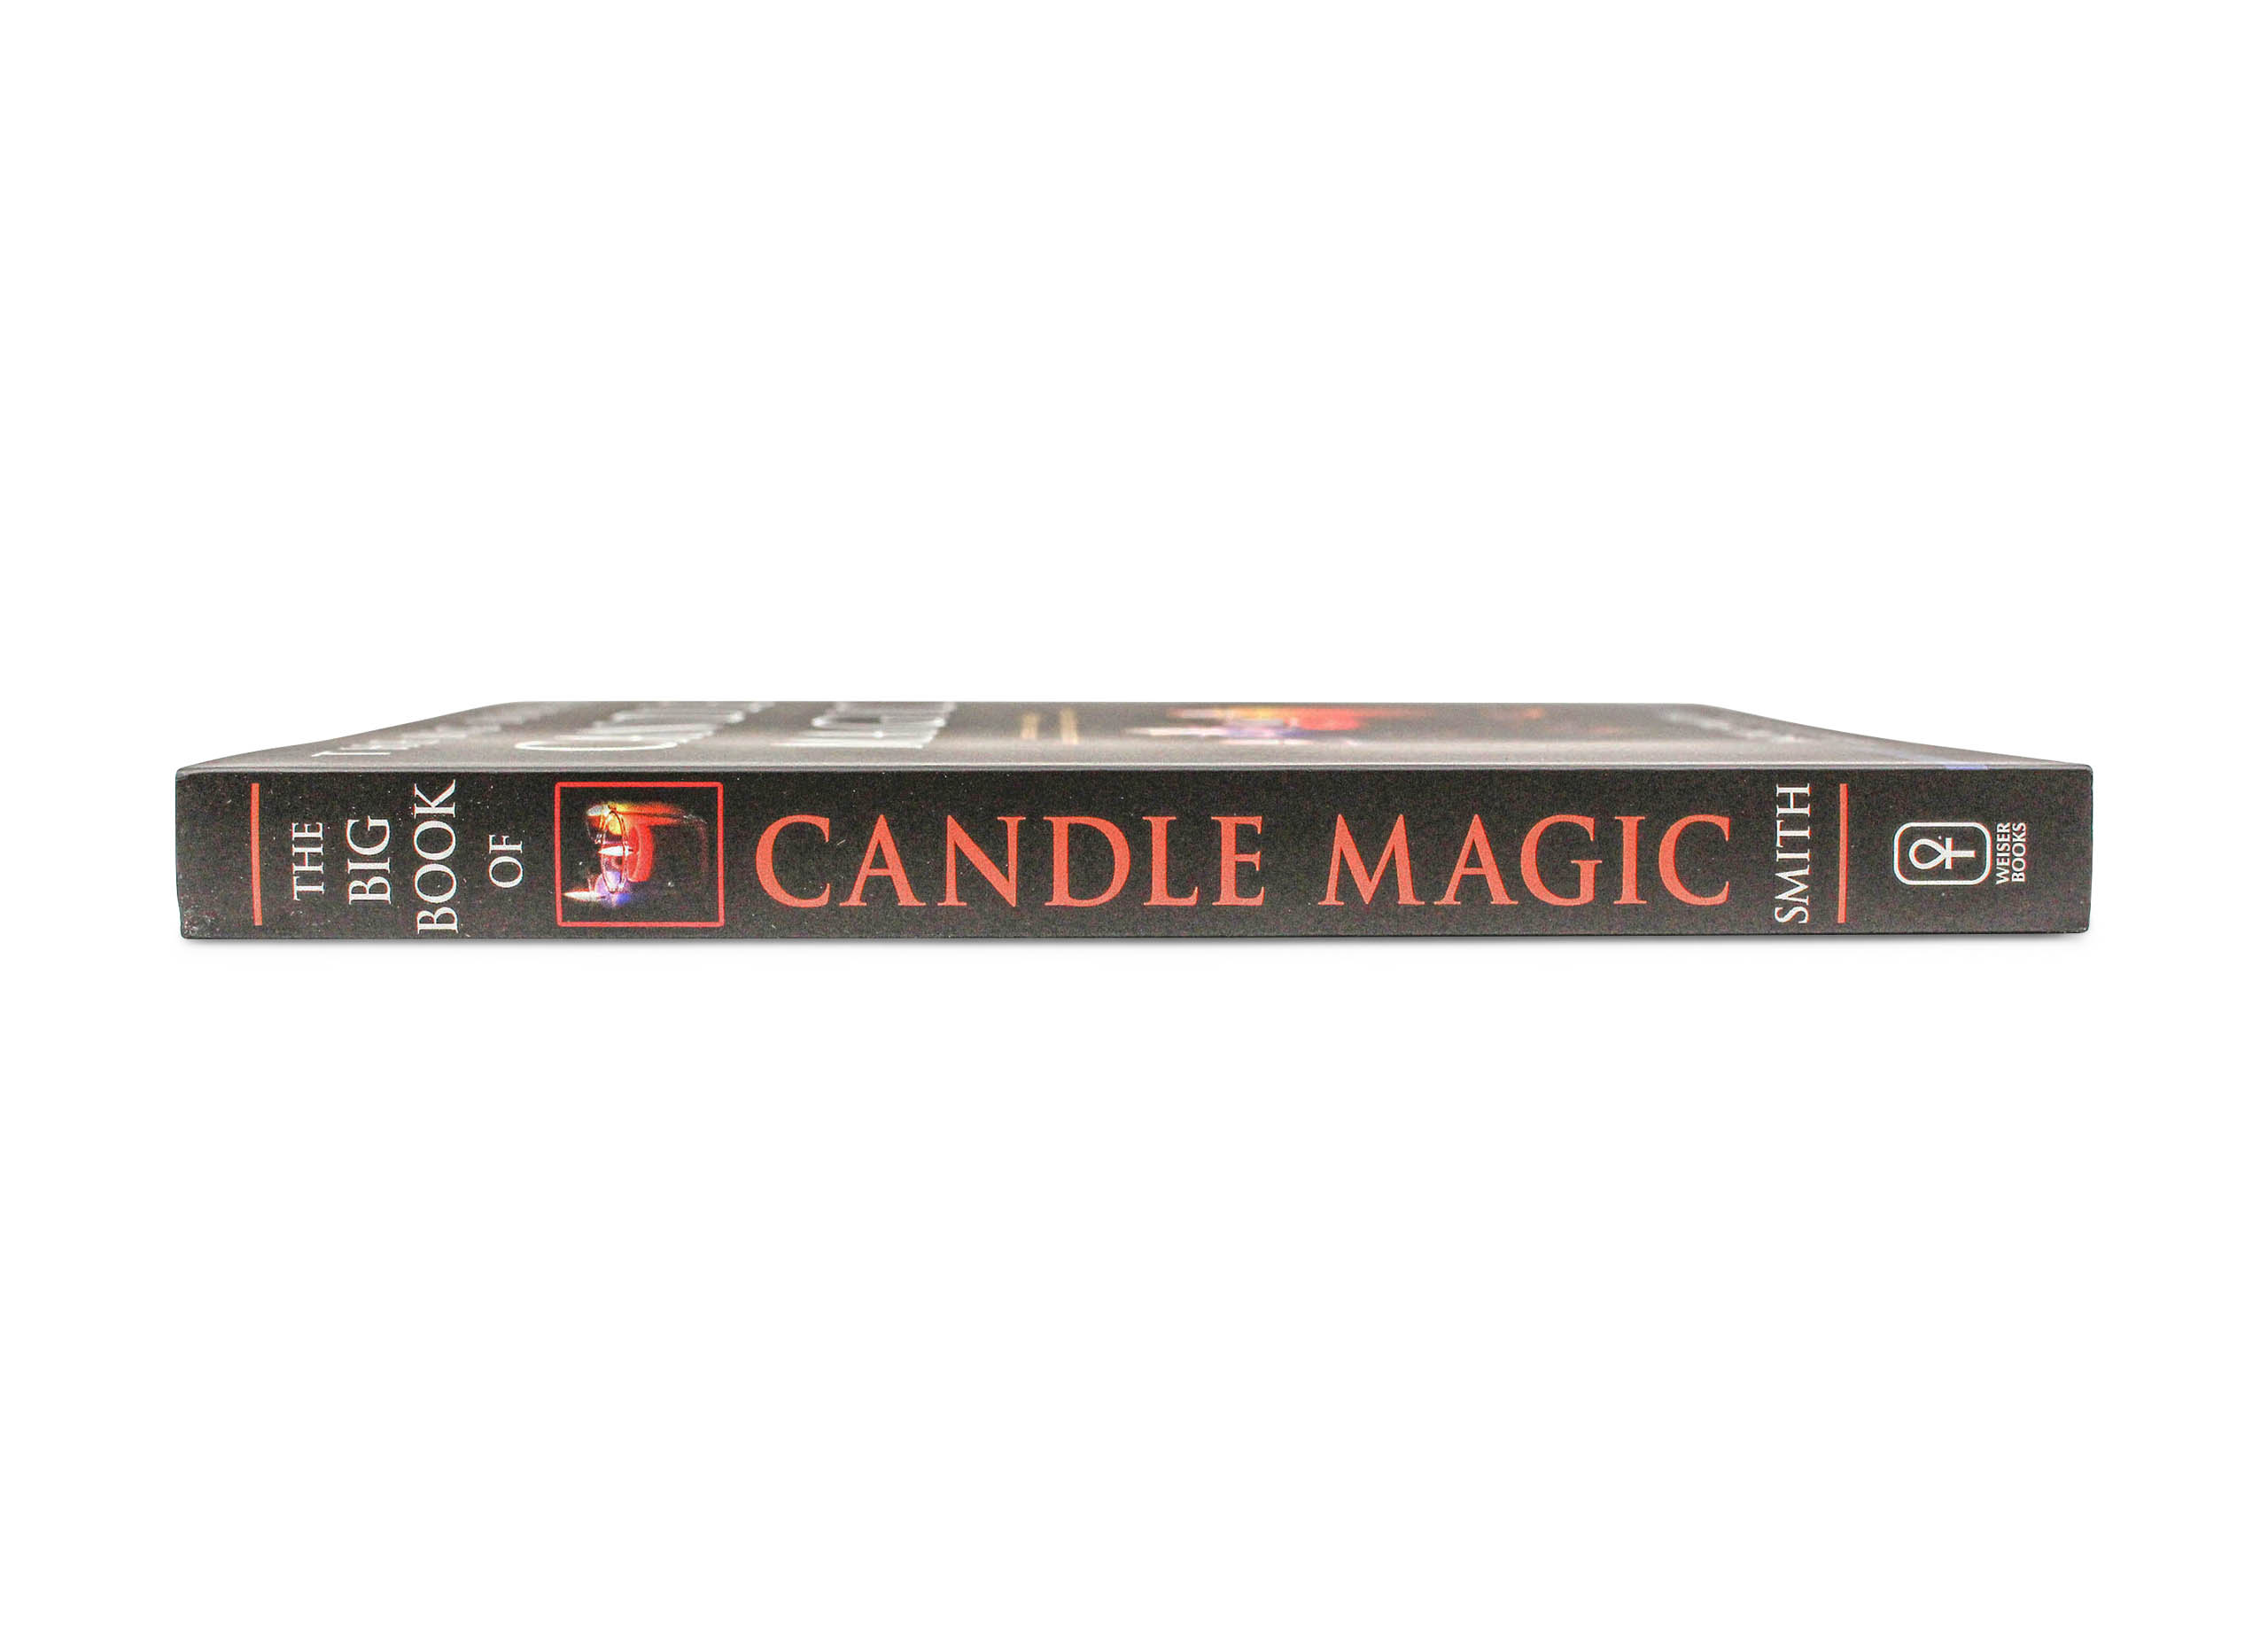 The Big Book of Candle Magic (tp) - Books _ Livres - Crystal Dreams